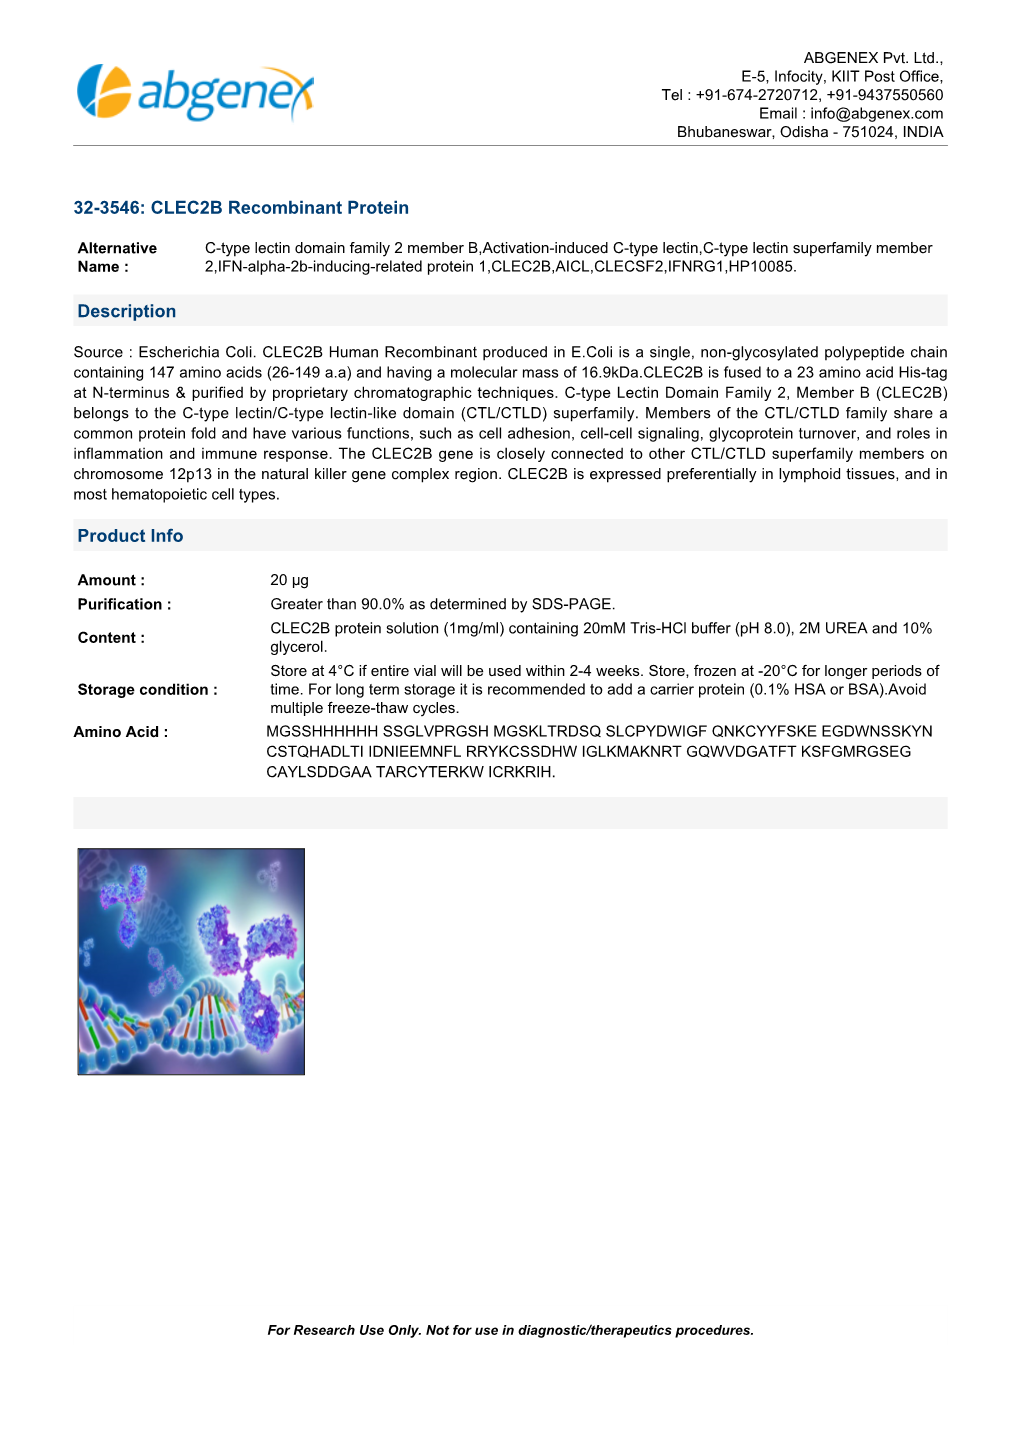 CLEC2B Recombinant Protein Description Product Info